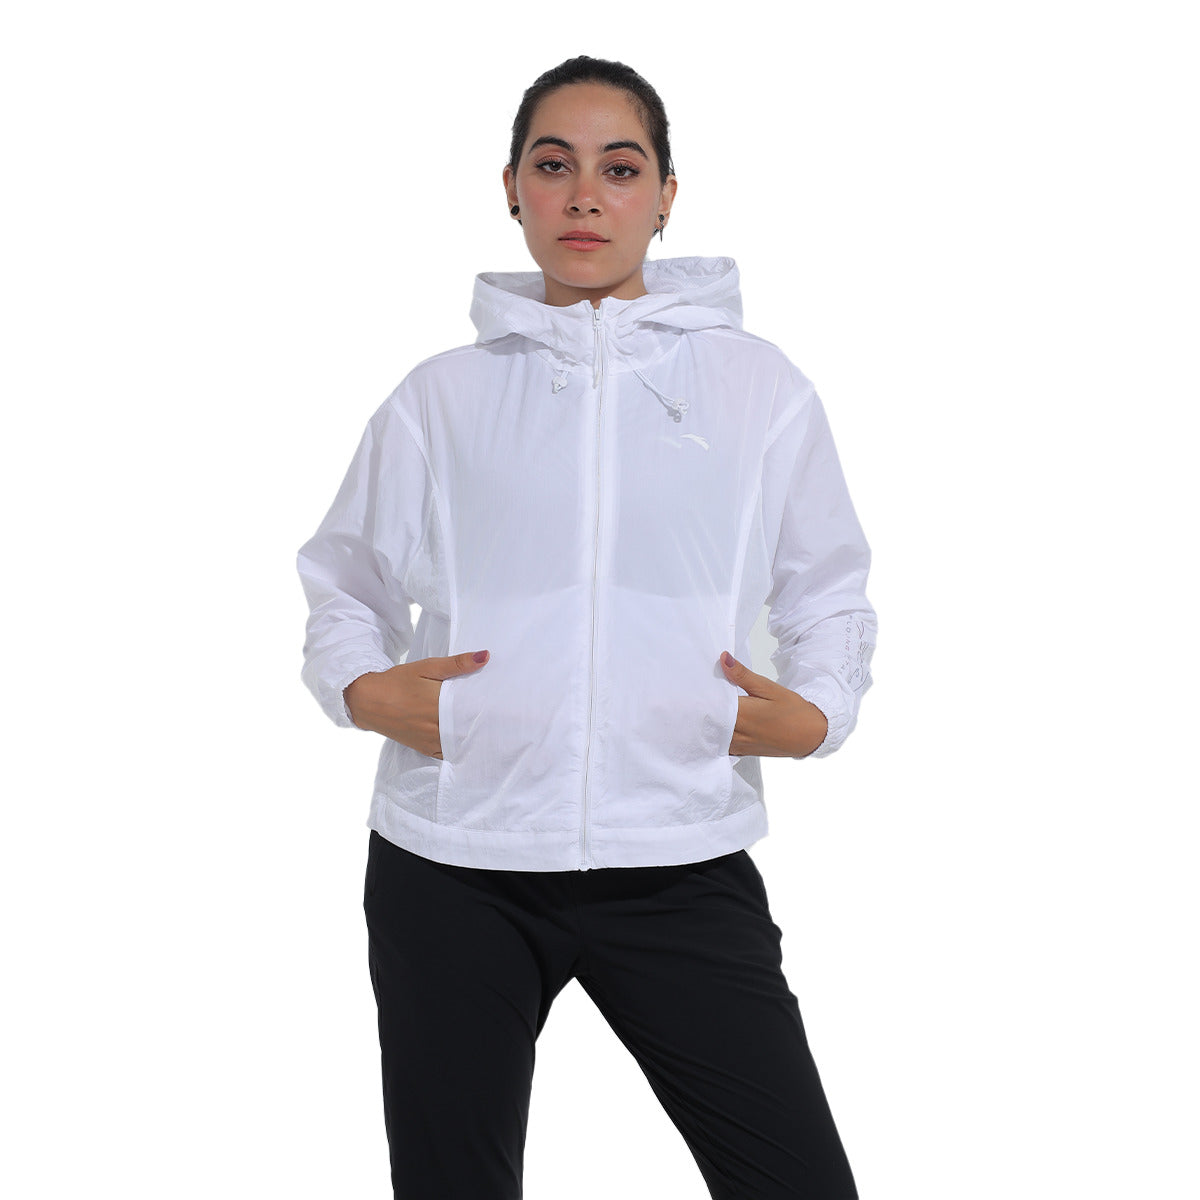 Anta Woven Track Sweatshirt with Hoodies For Women, White